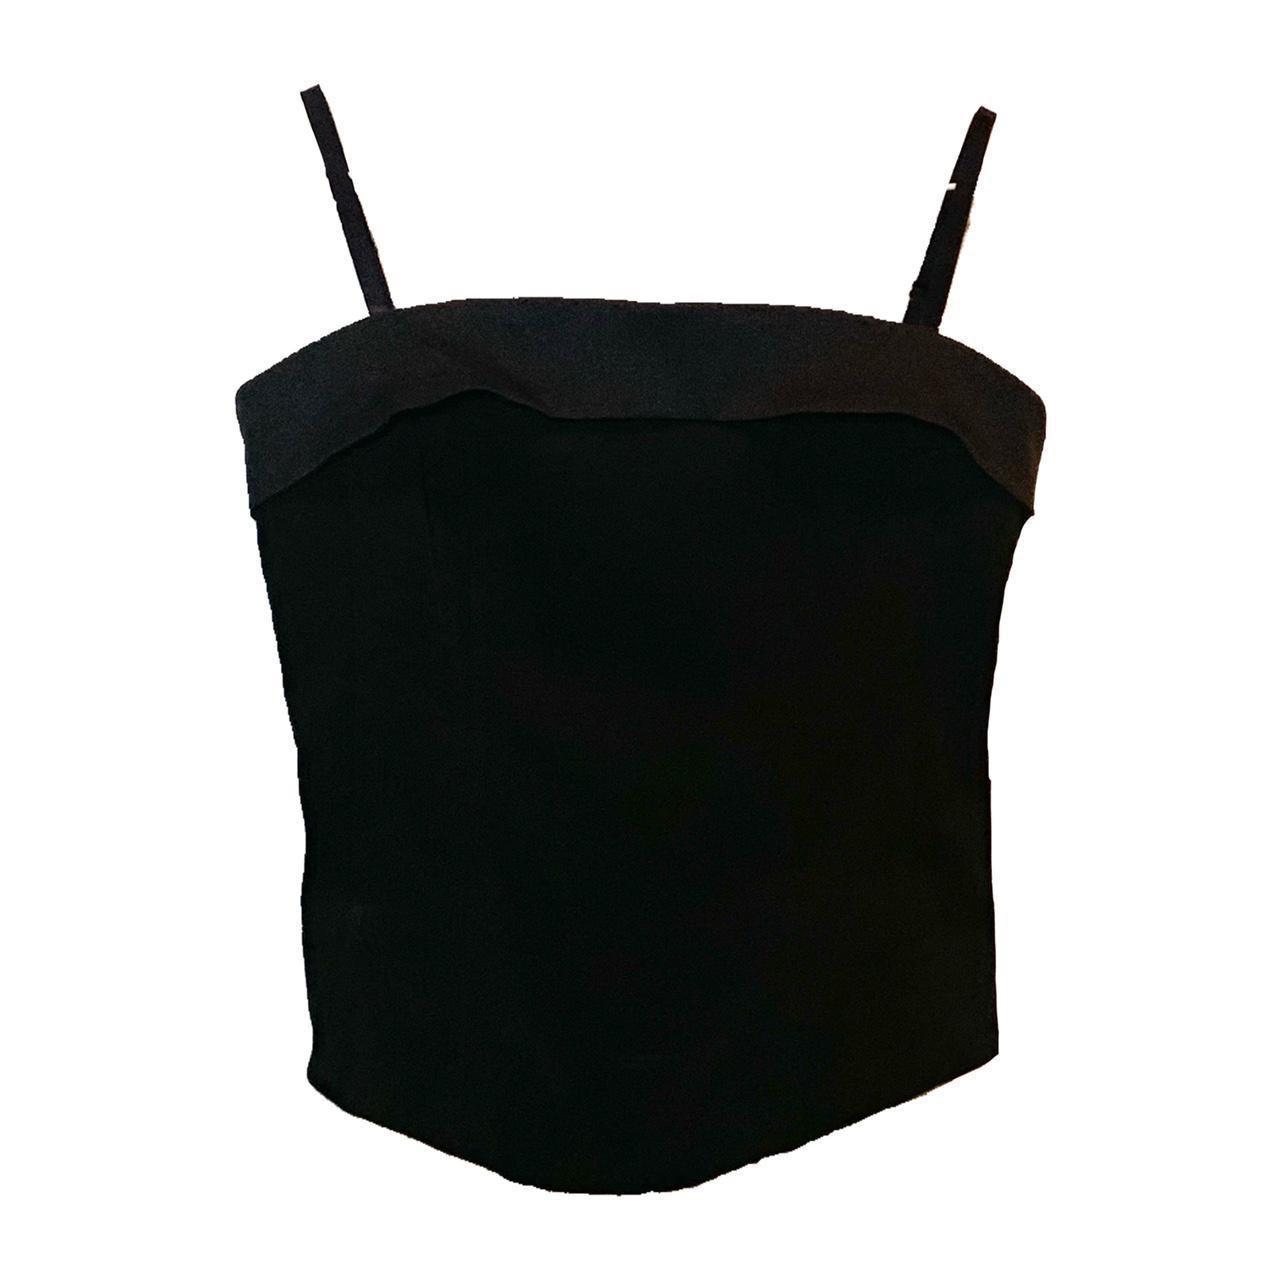 ✩vintage 80s black corset .·˖*✩ size 38c FREE - Depop